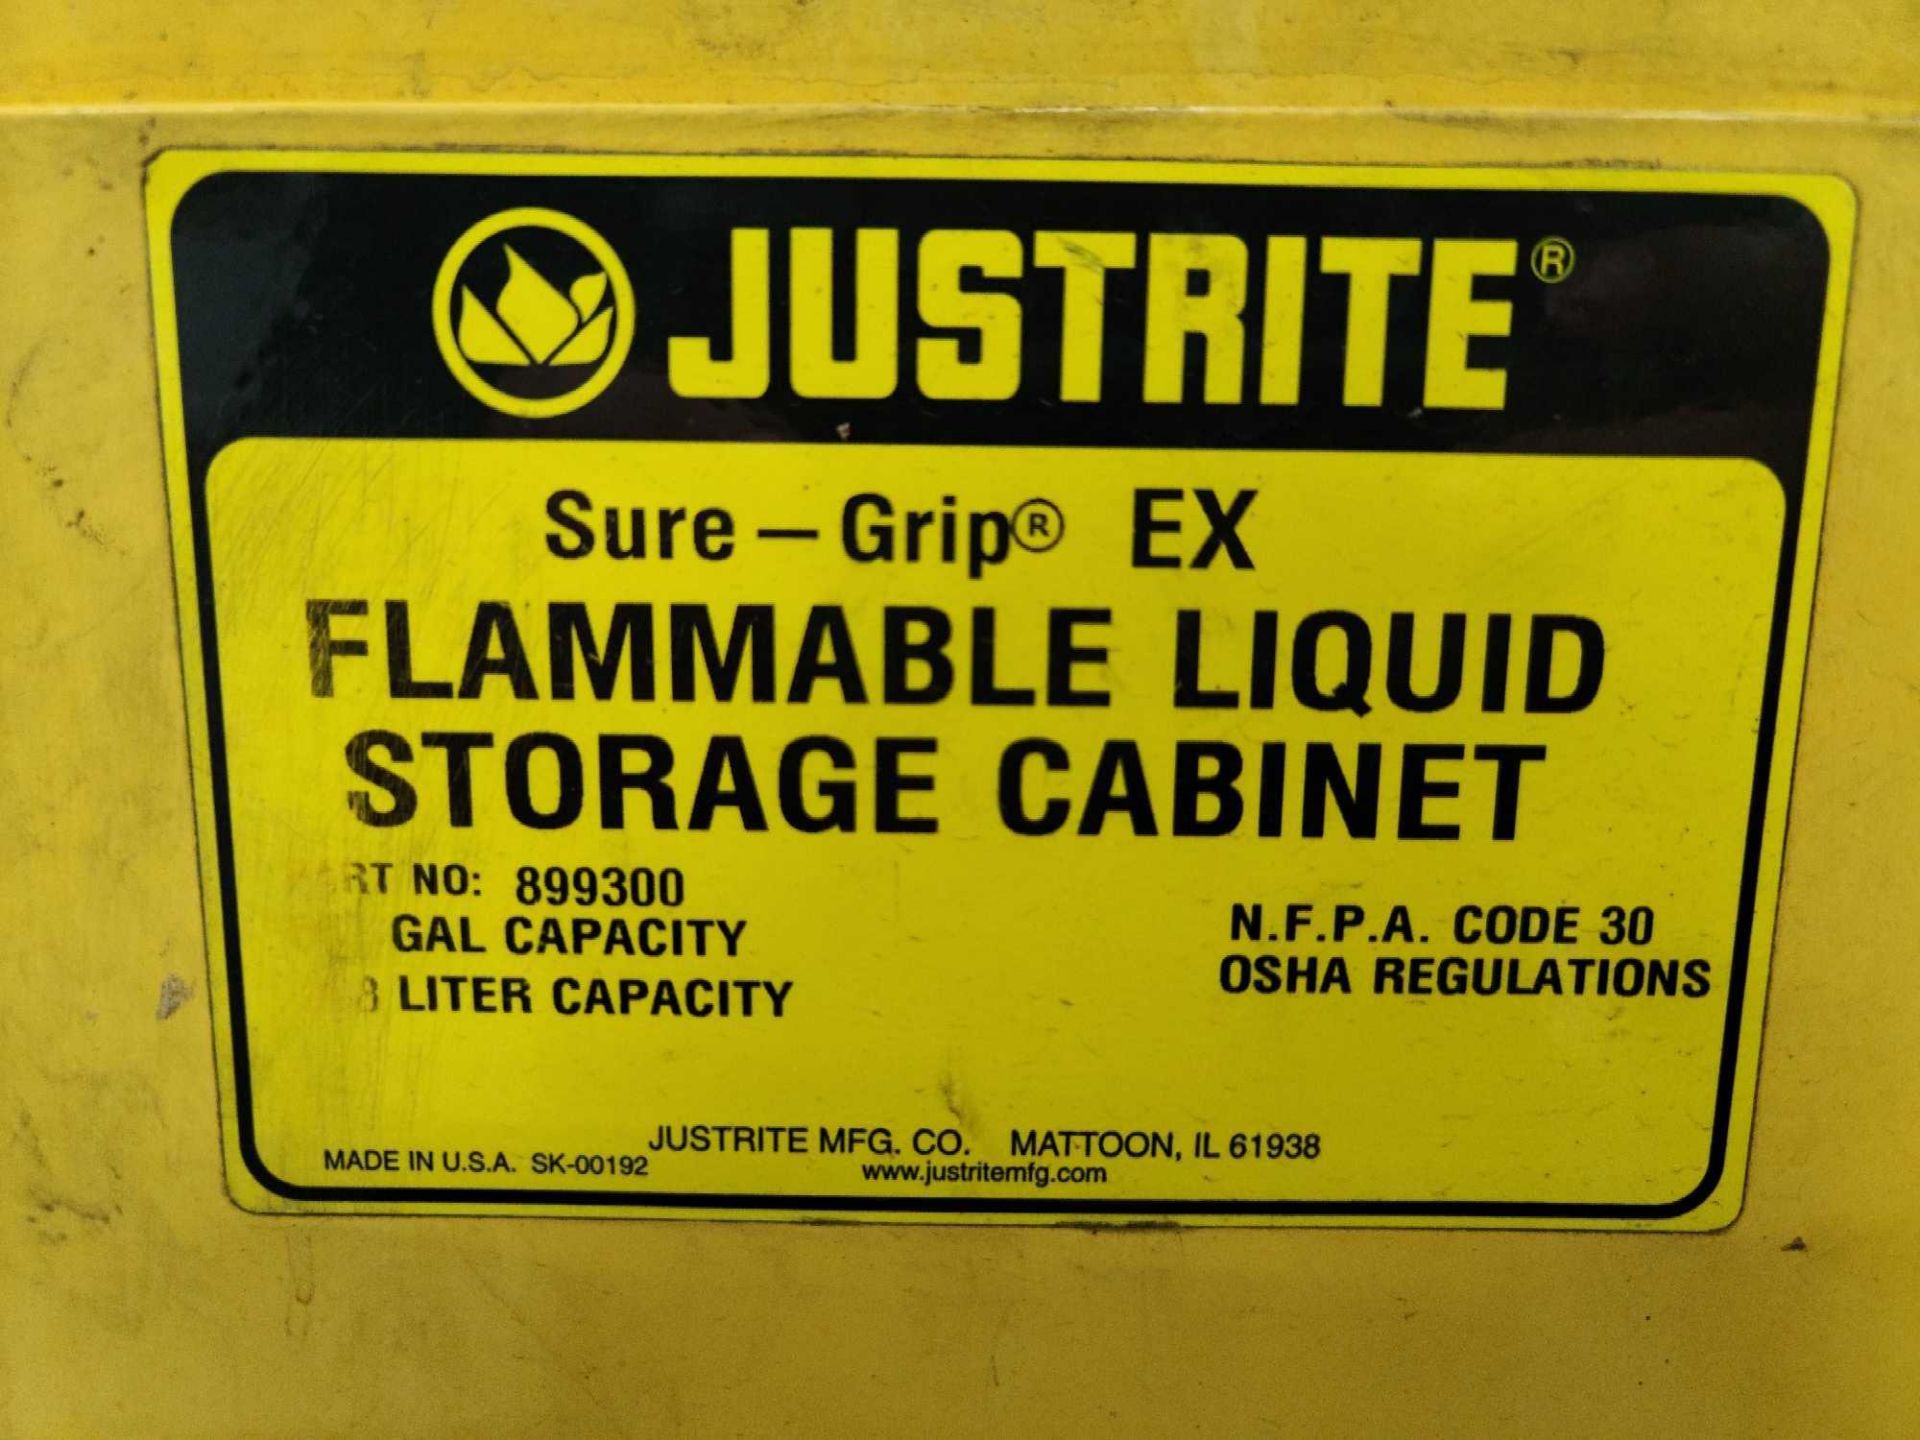 Justrite Sure-Grip EX Flammable Liquid Storage Cabinet - Image 3 of 4